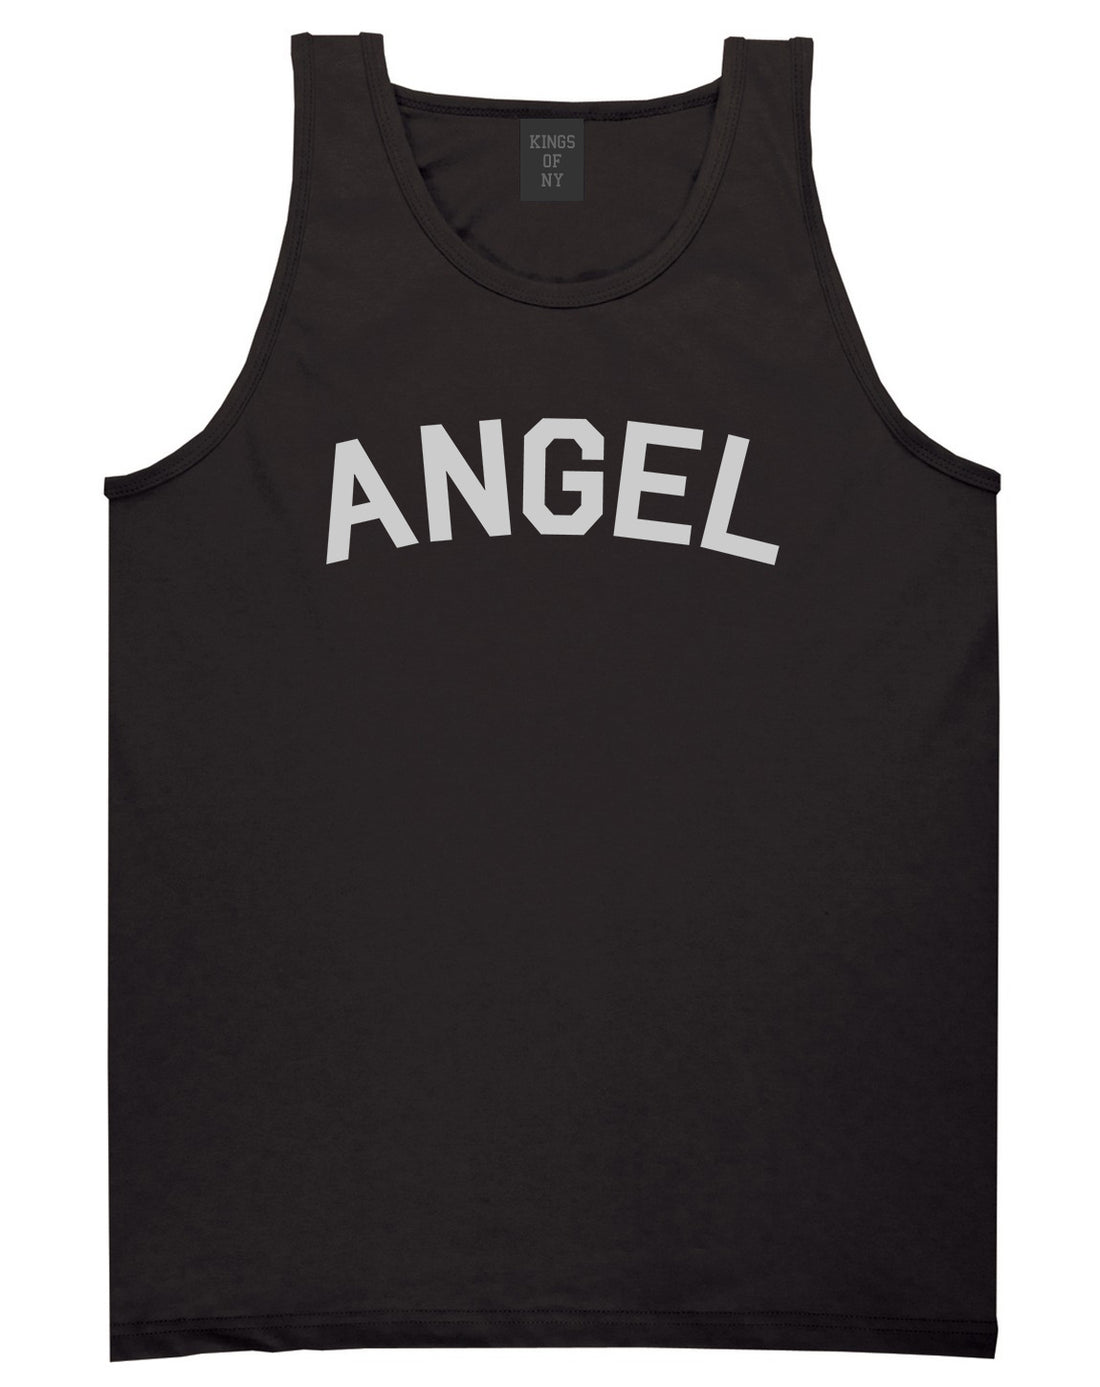 Angel Arch Good Tank Top Shirt in Black